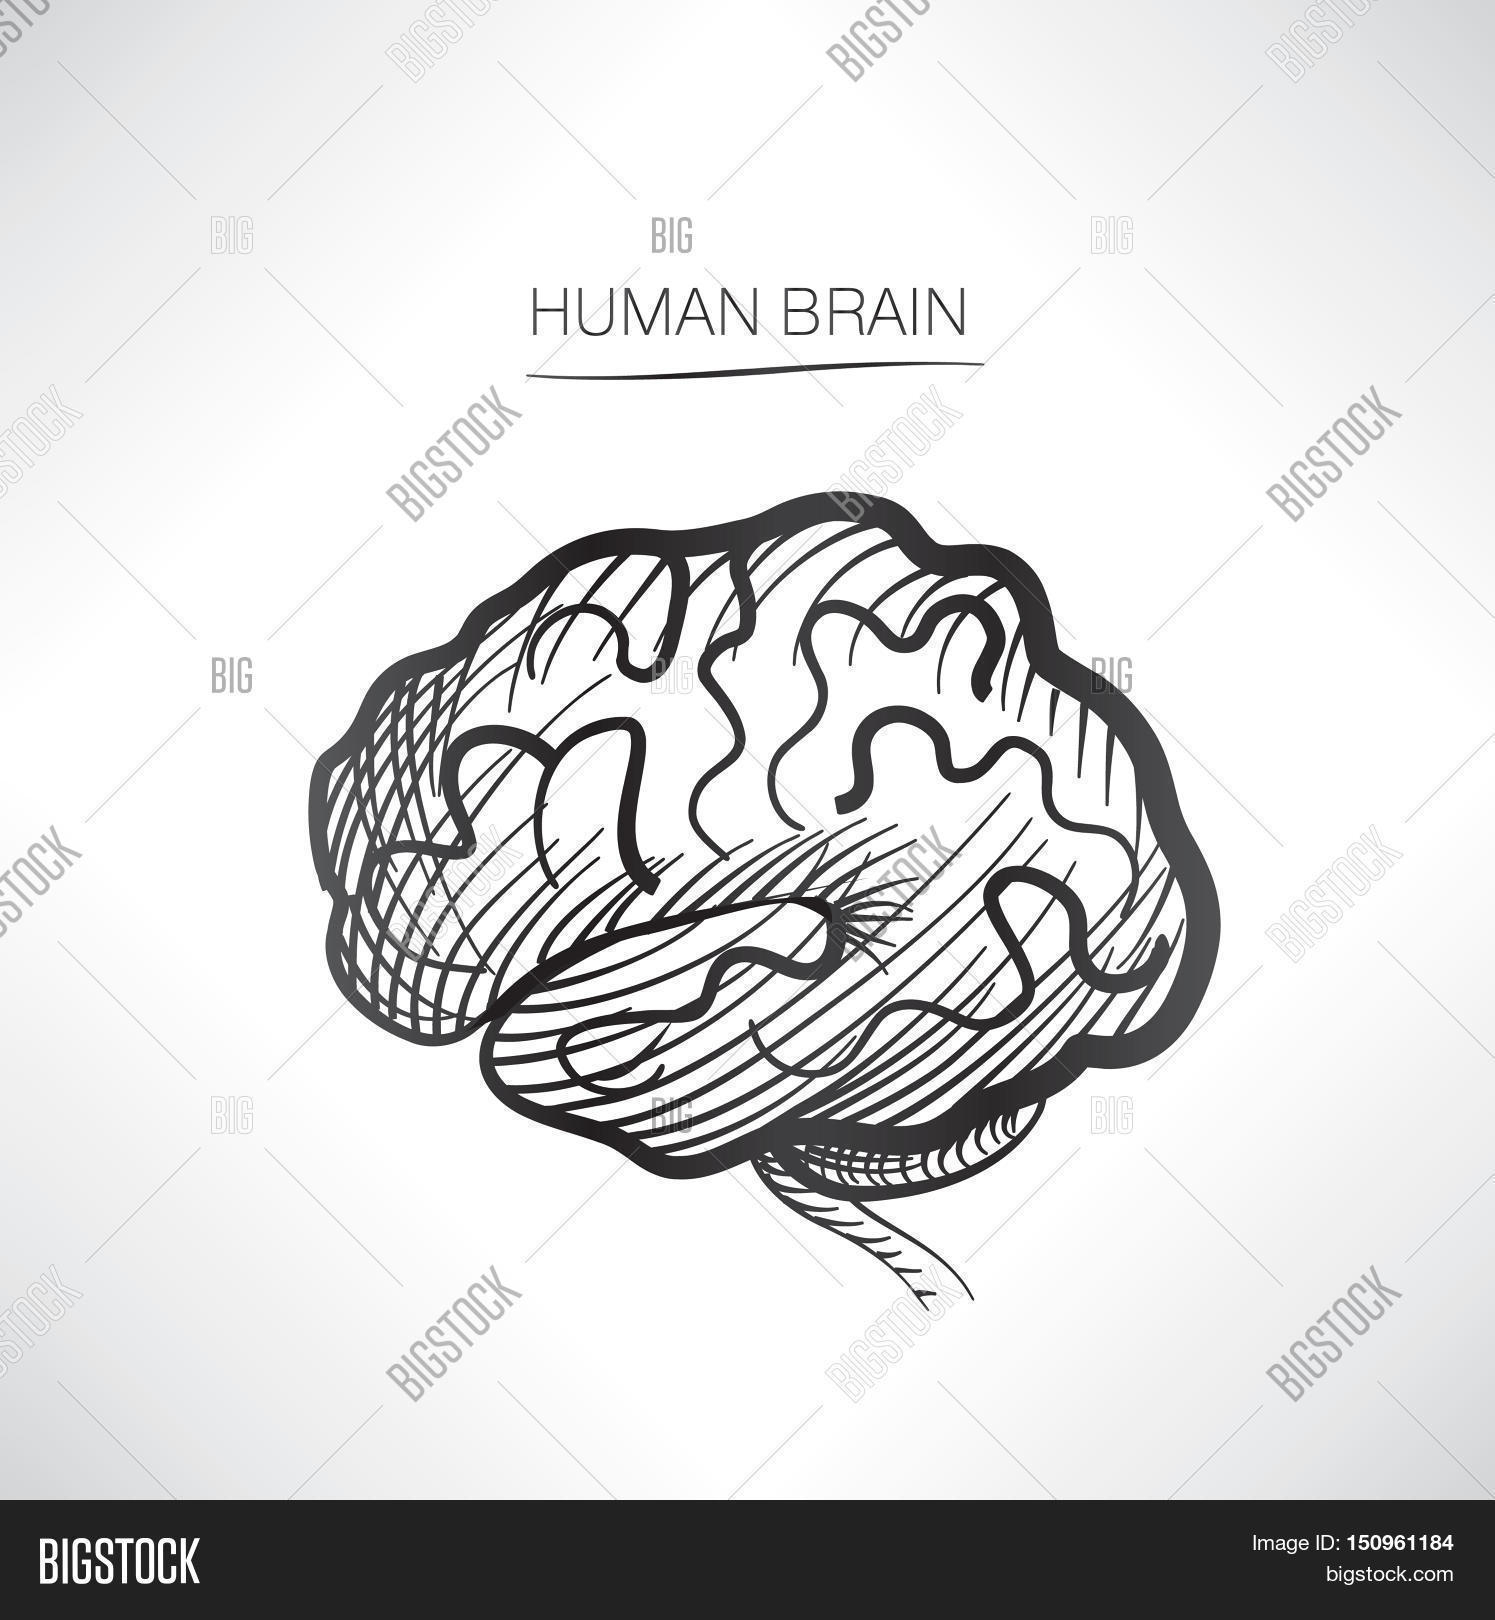 Human Organs Diagram Human Organs Drawing At Getdrawings Free For Personal Use